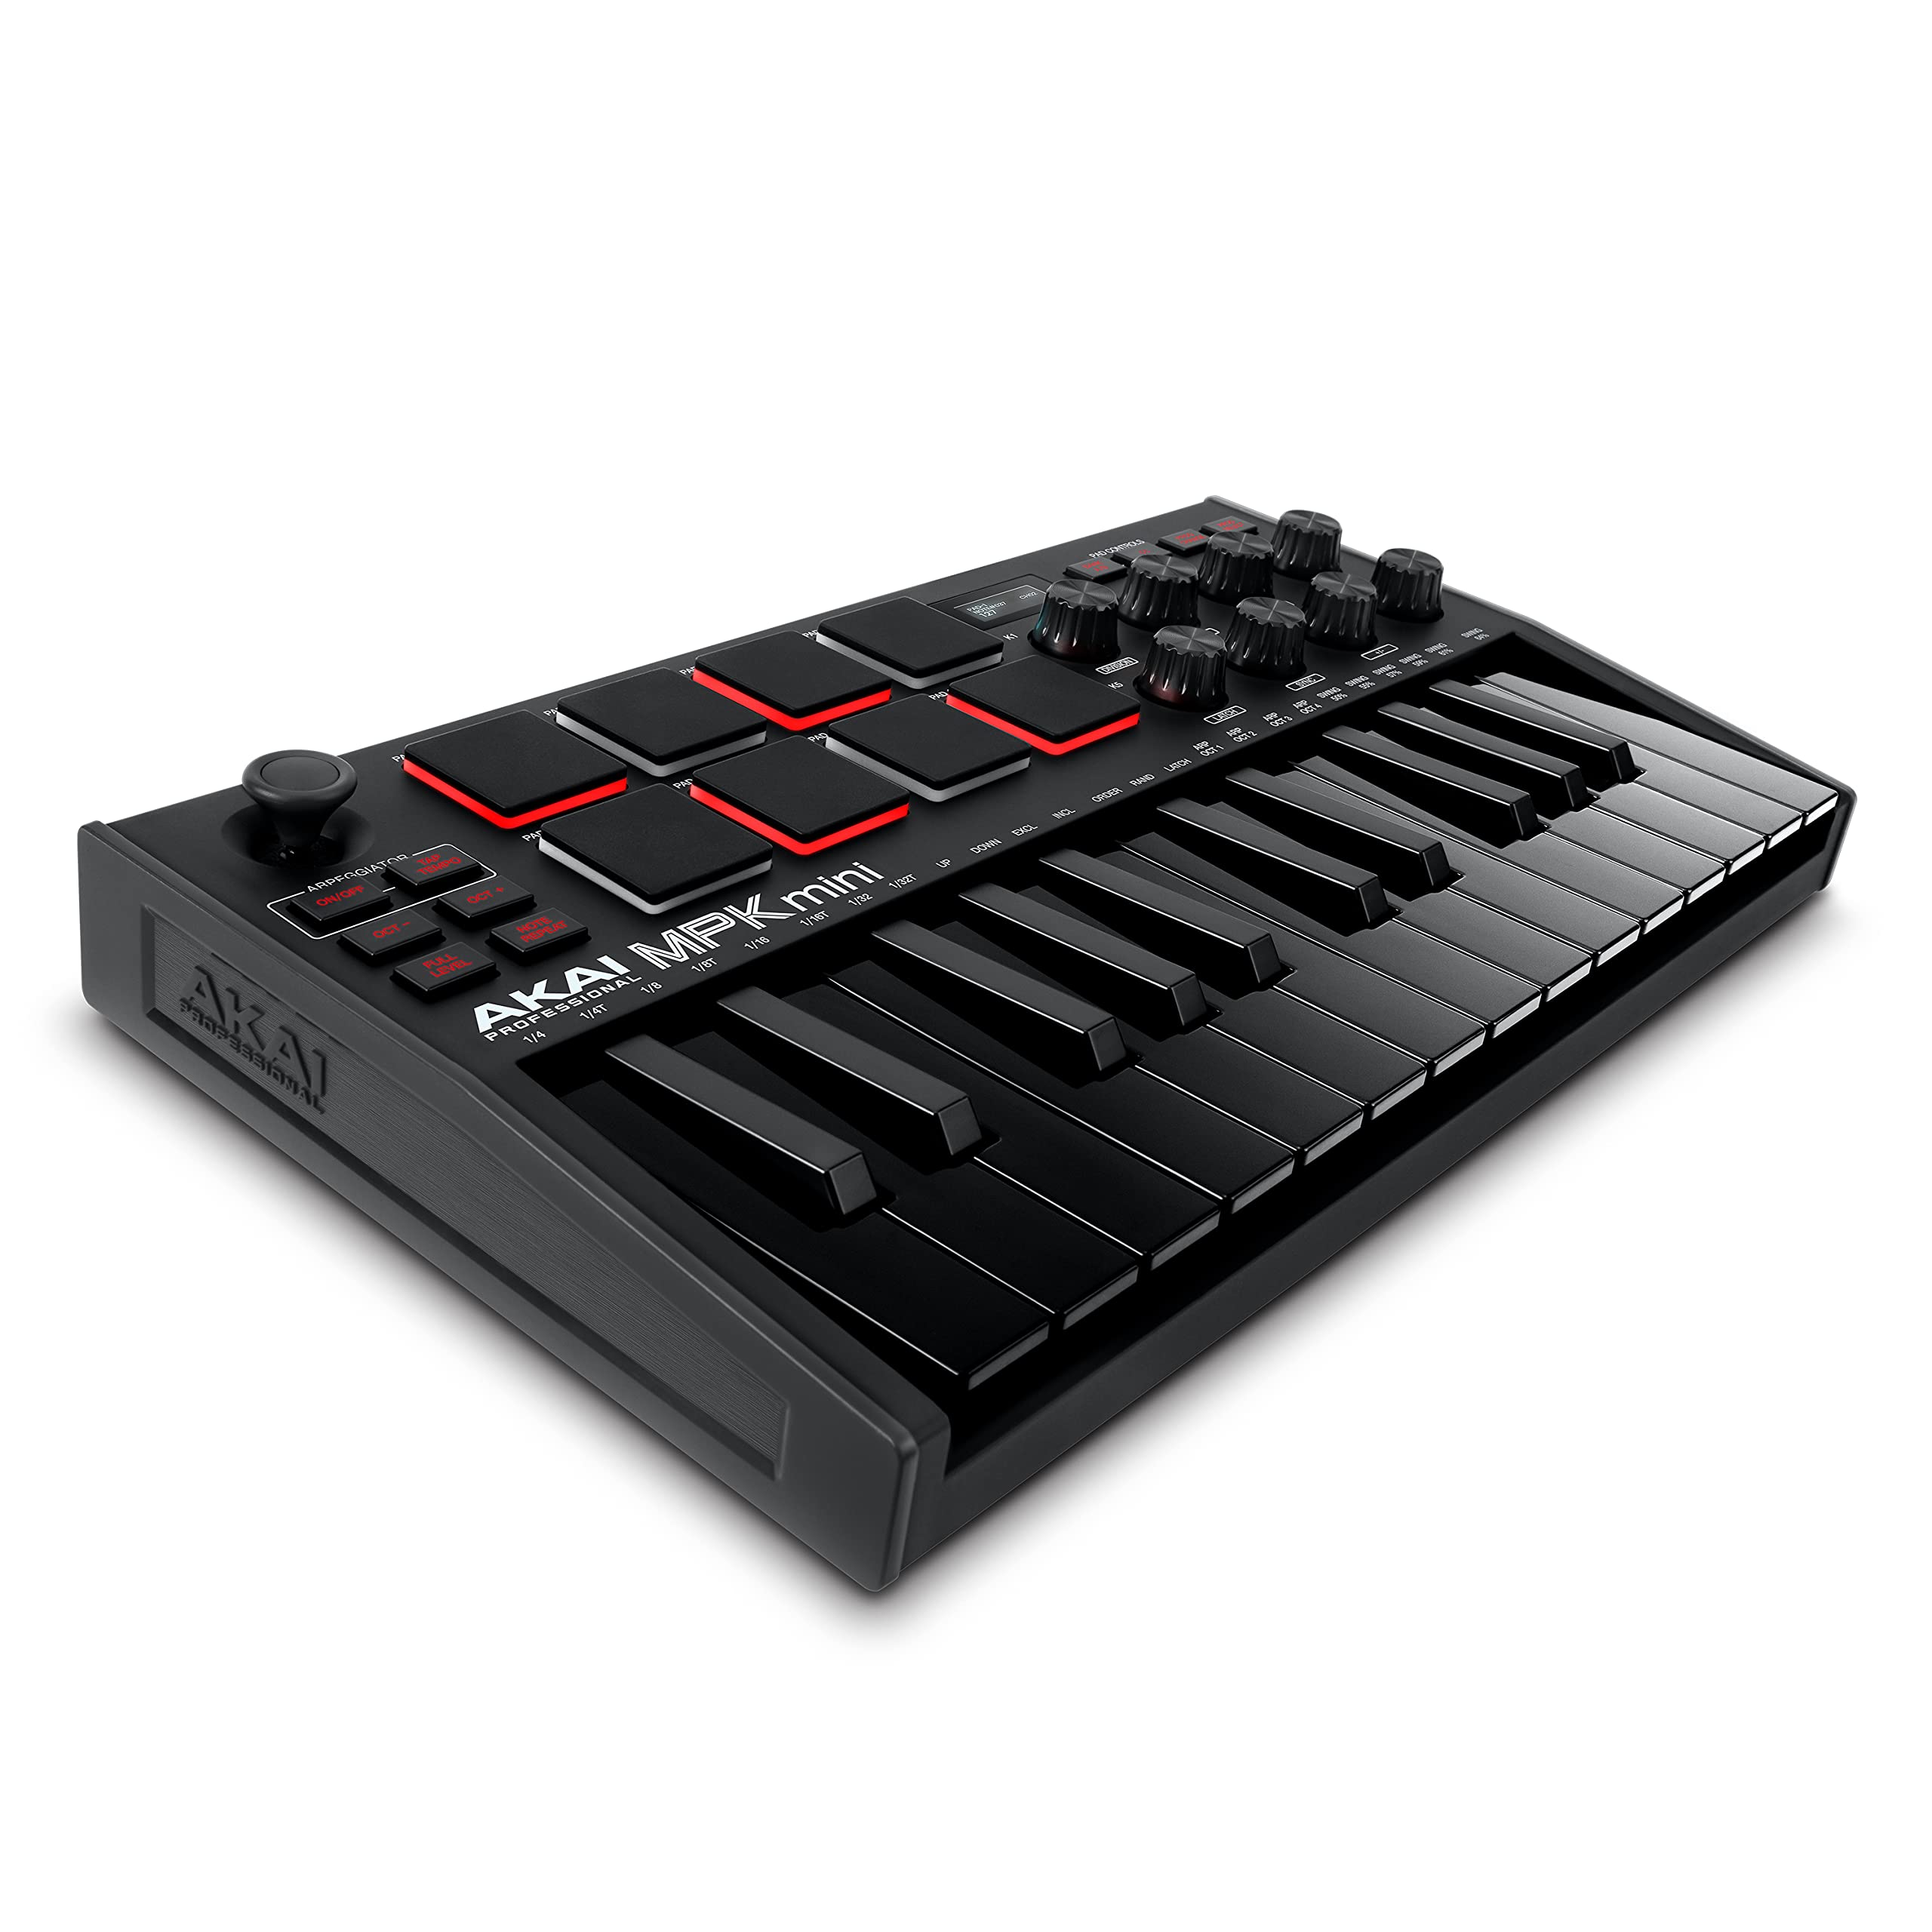  Akai Professional MPK Mini MK3 - 25 مفتاحًا USB متحكم لوحة مفاتيح MIDI مع 8 وسادات طبل بإضاءة خلفية و 8 مقابض وبرامج إنتاج موسيقى...